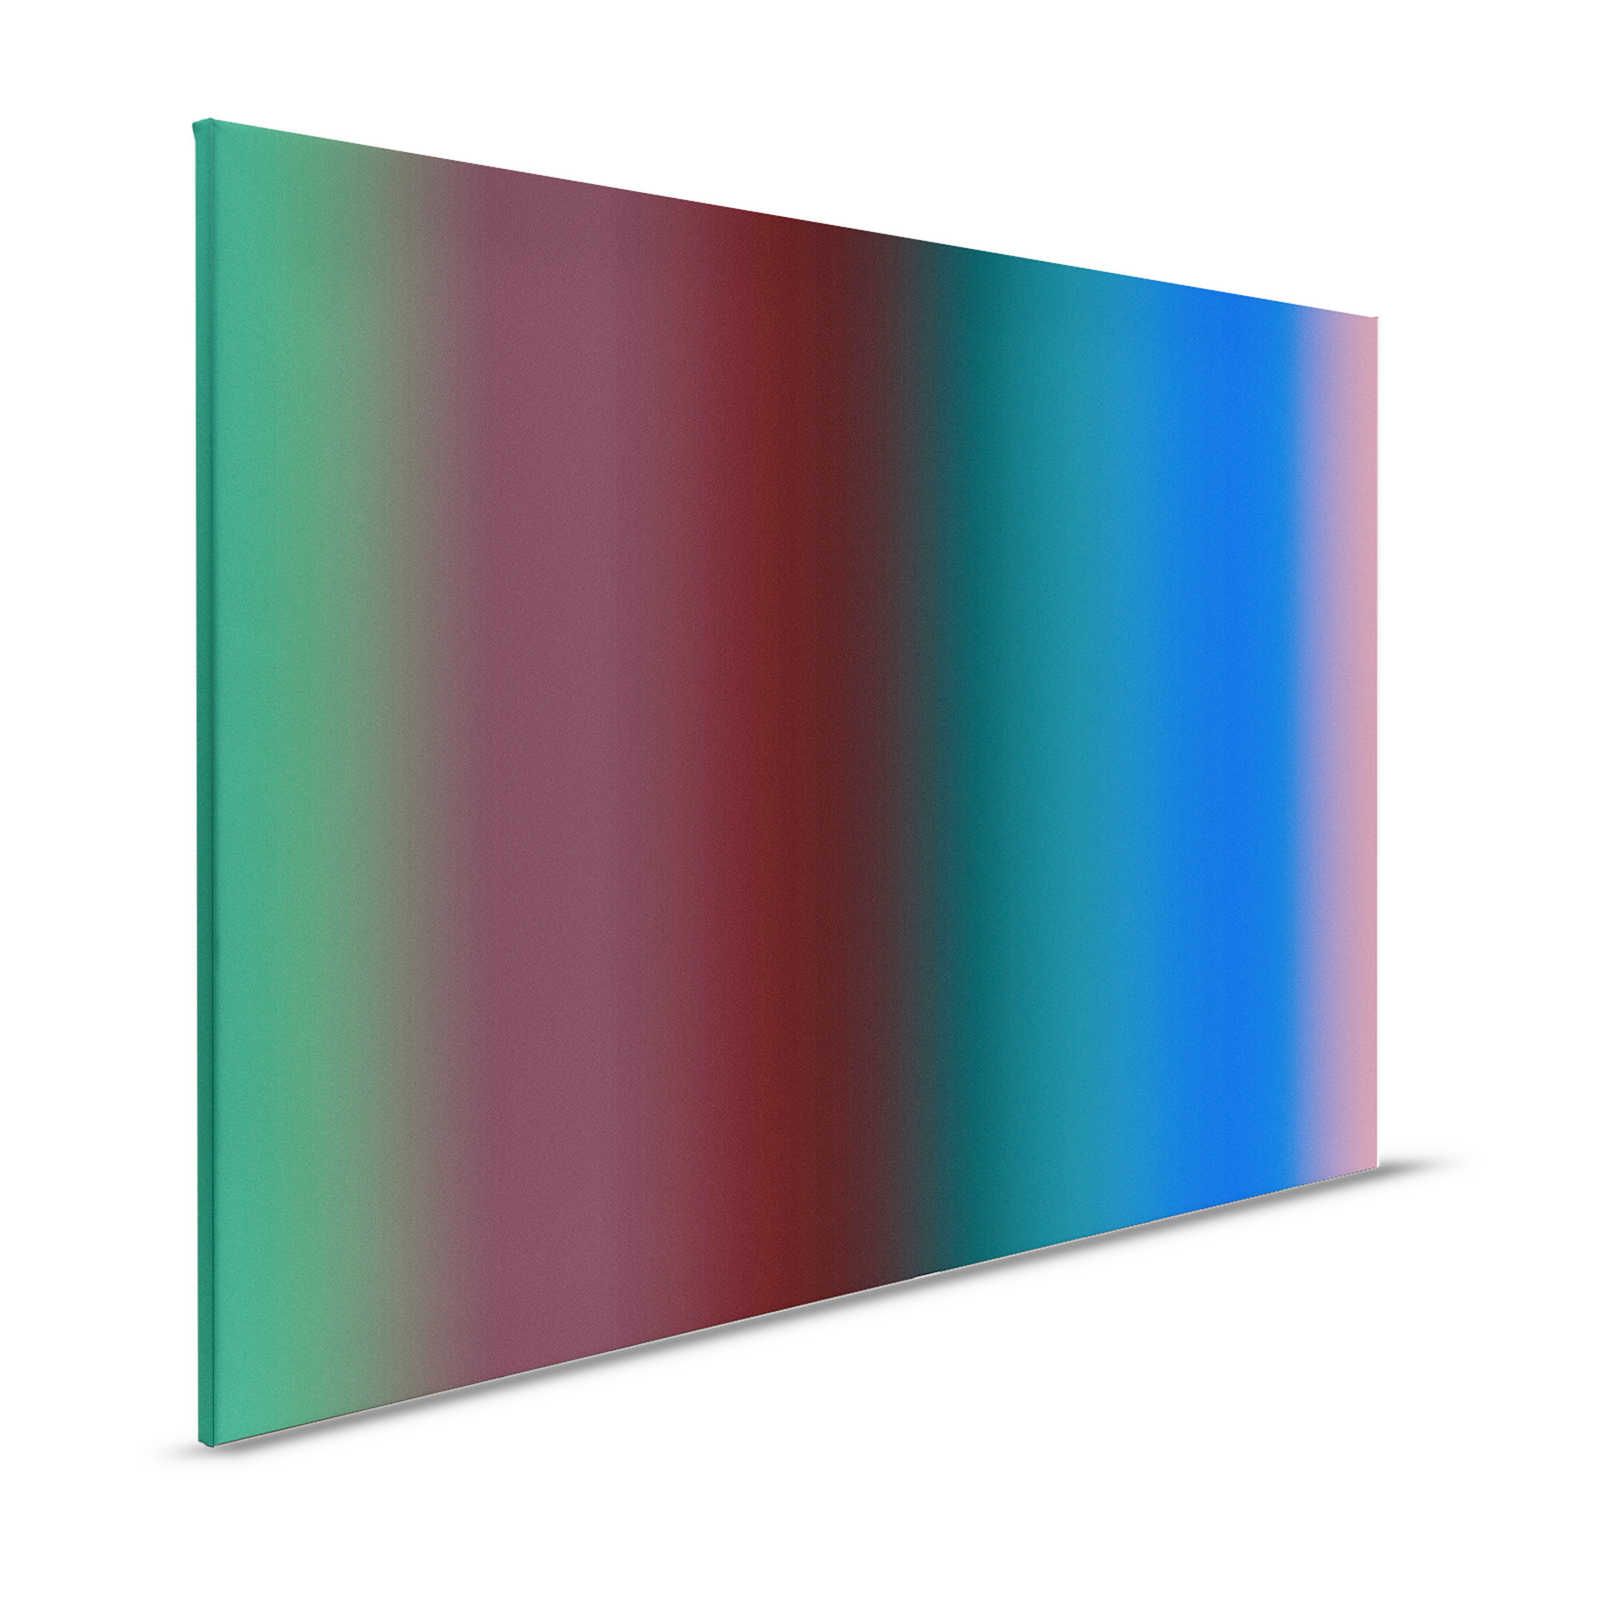 Over the Rainbow 2 - Lienzo degradado Diseño de rayas de colores - 1,20 m x 0,80 m
